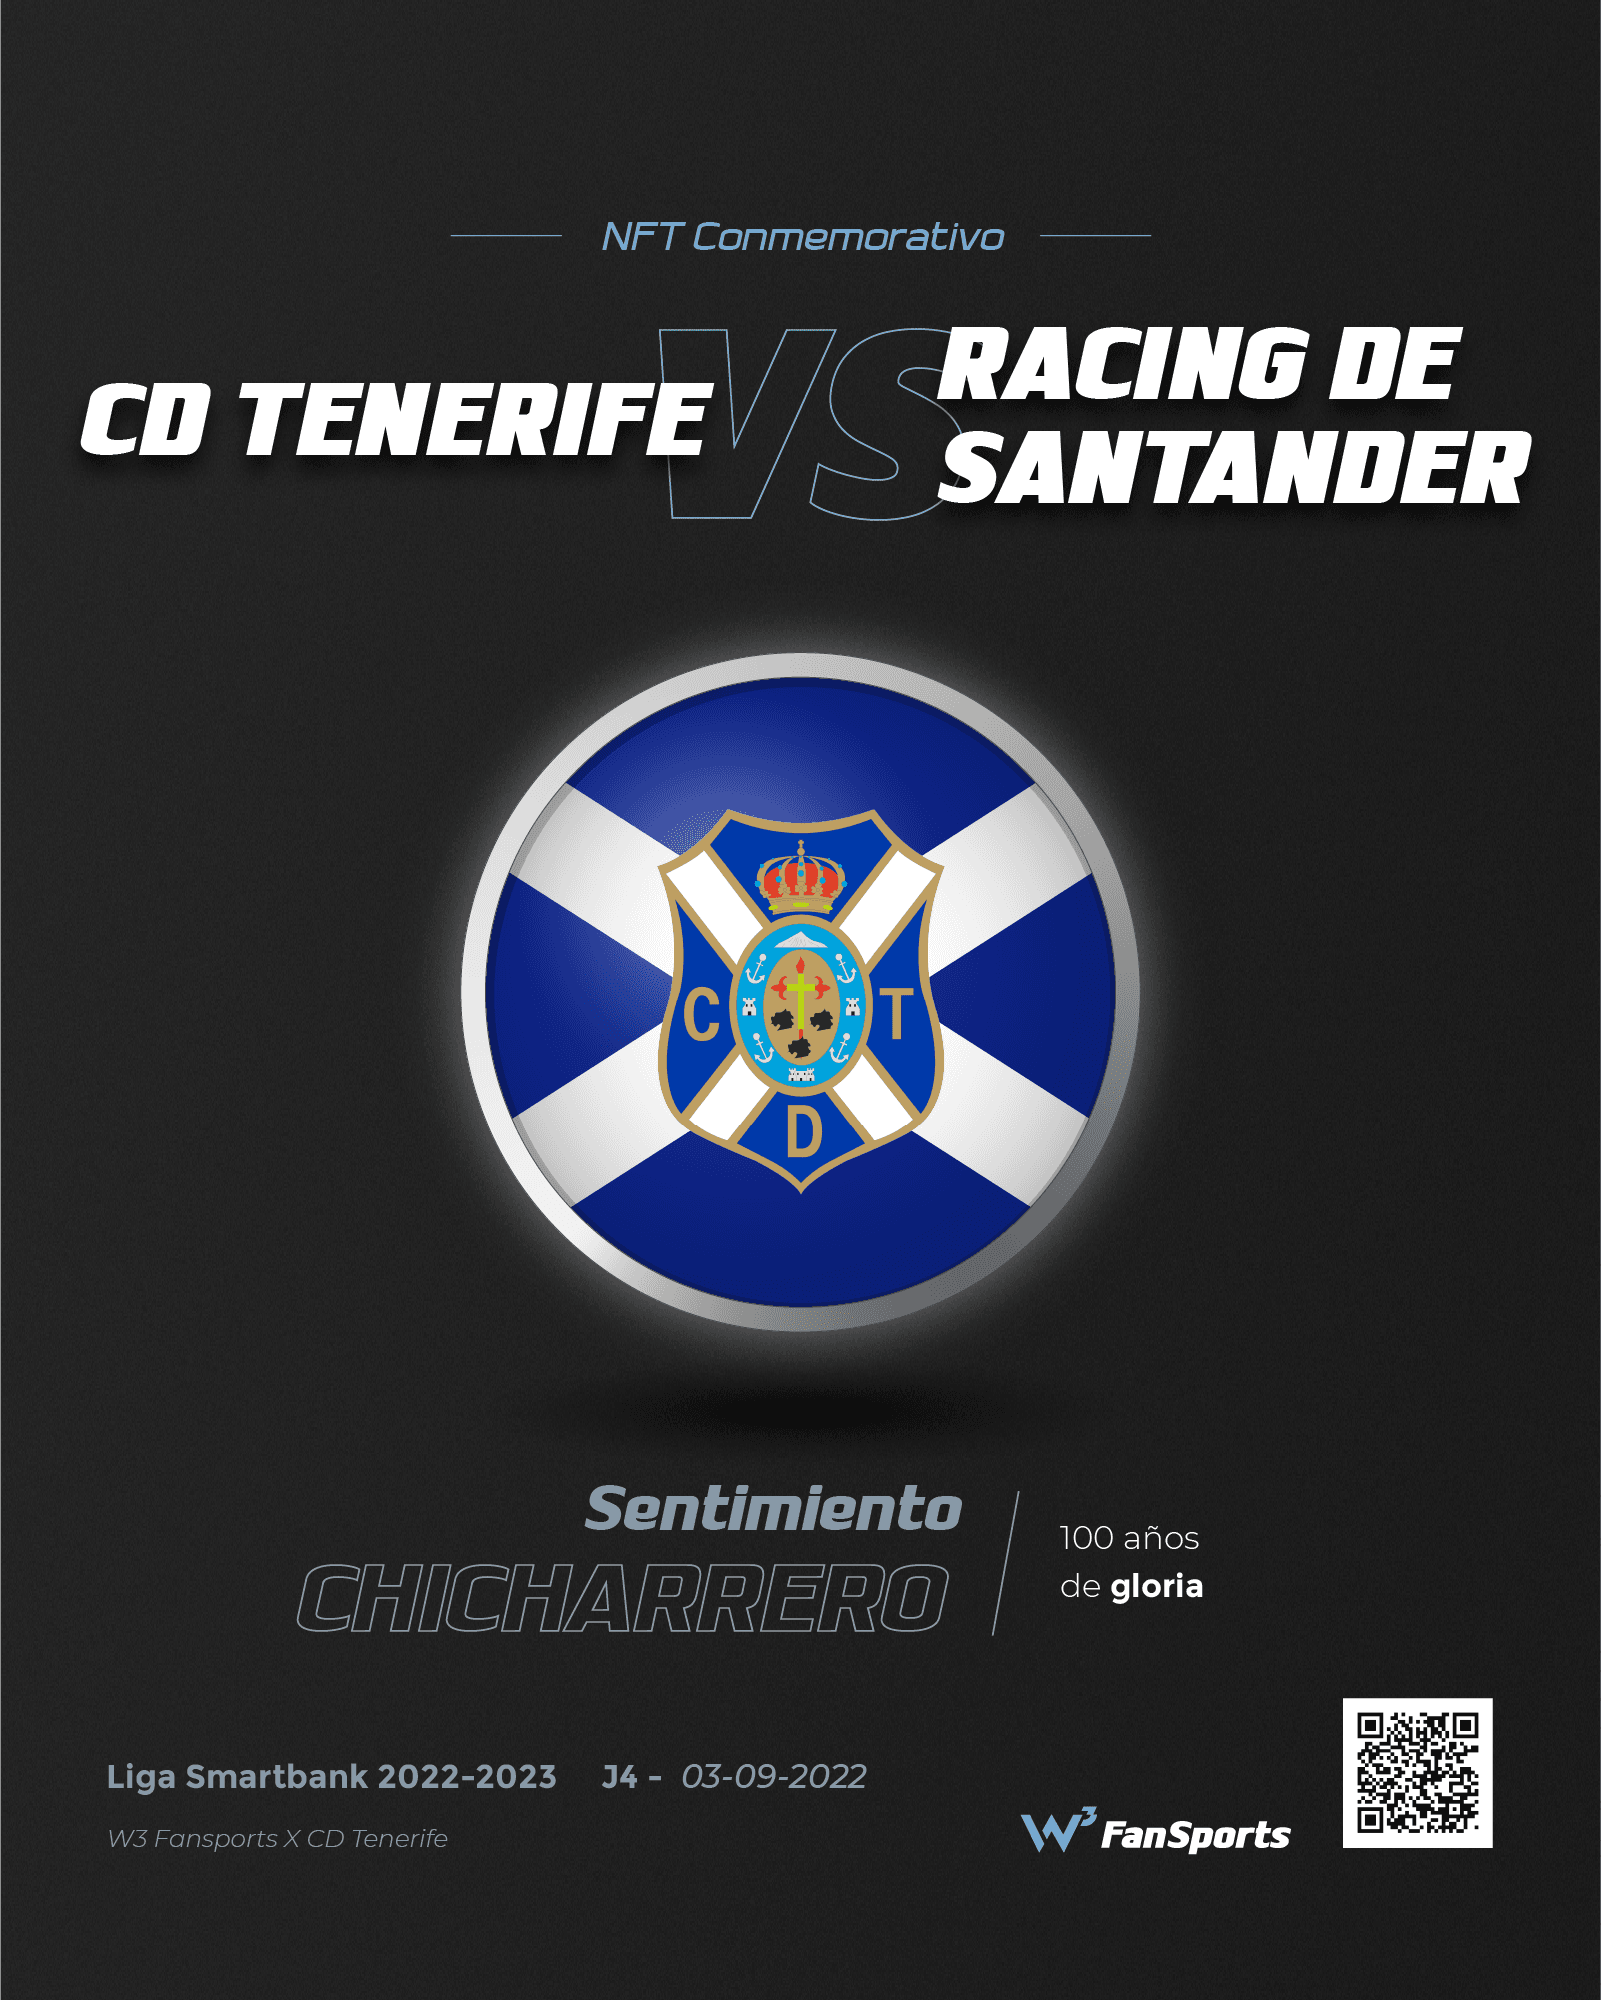 CD Tenerife vs Racing de Santander J4 03/09/2022 - Conmemorativo